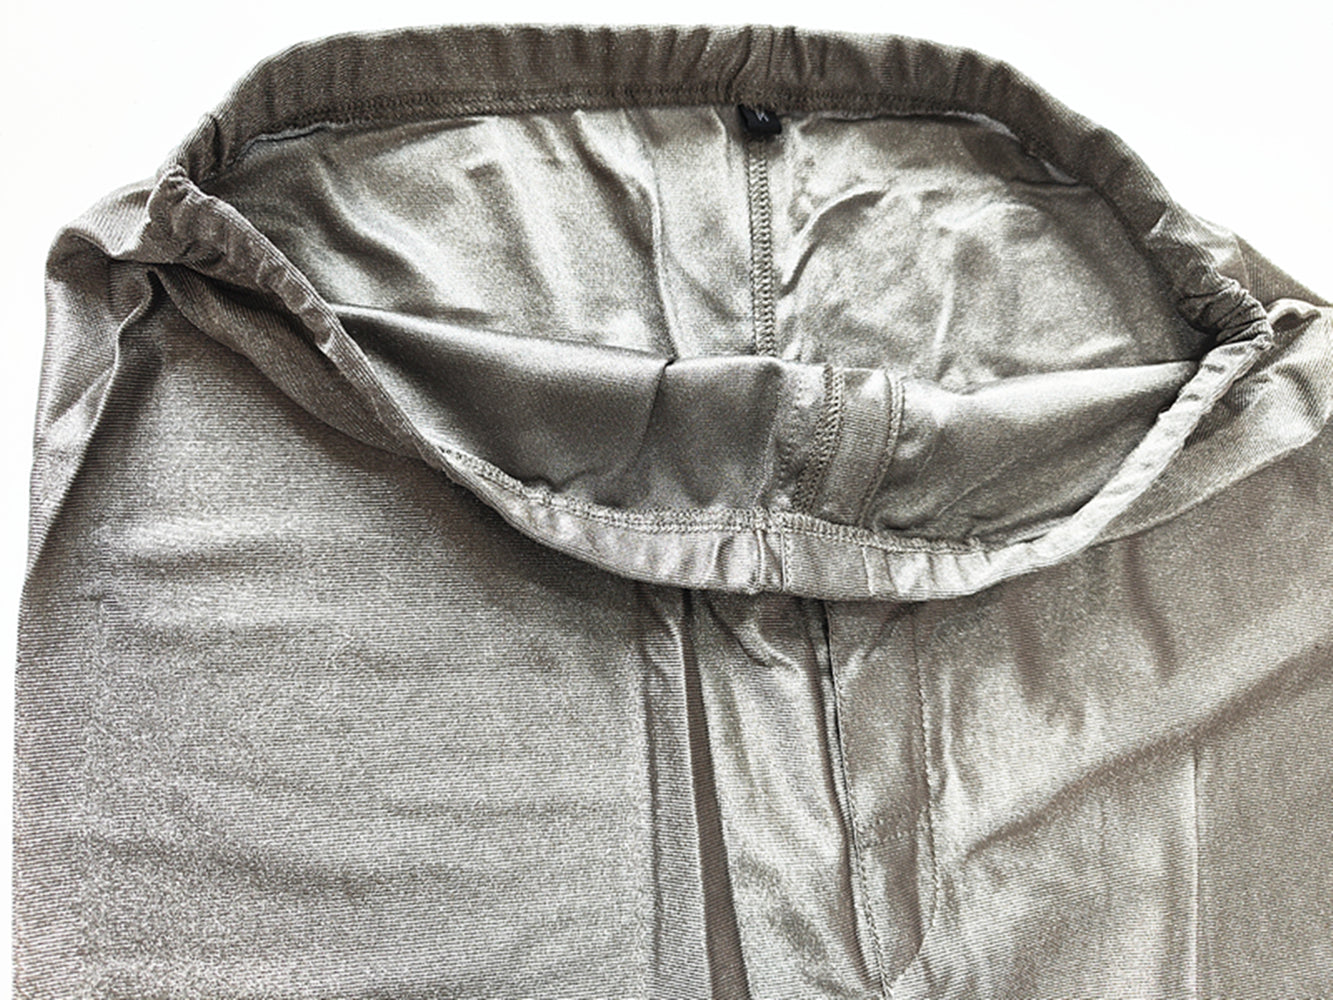 Pure Silver Fiber Fabric -EMF Protection Anti-Radiation Clothes-Long Leg Bottoms